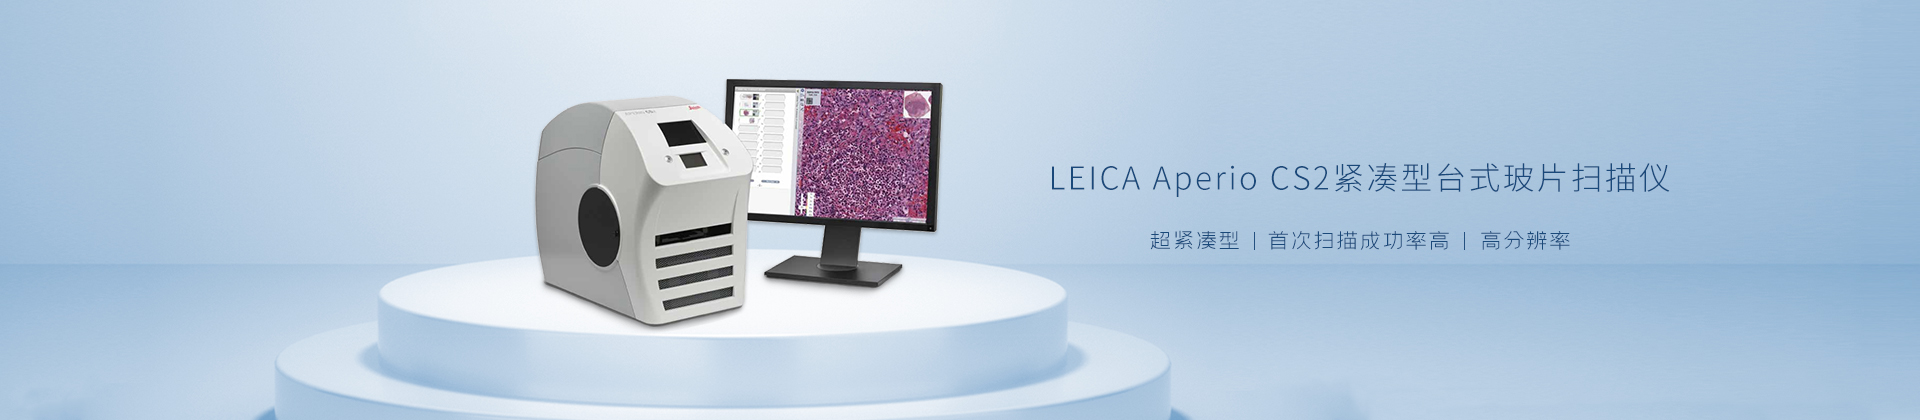 LEICA Aperio CS2紧凑型台式玻片扫描仪